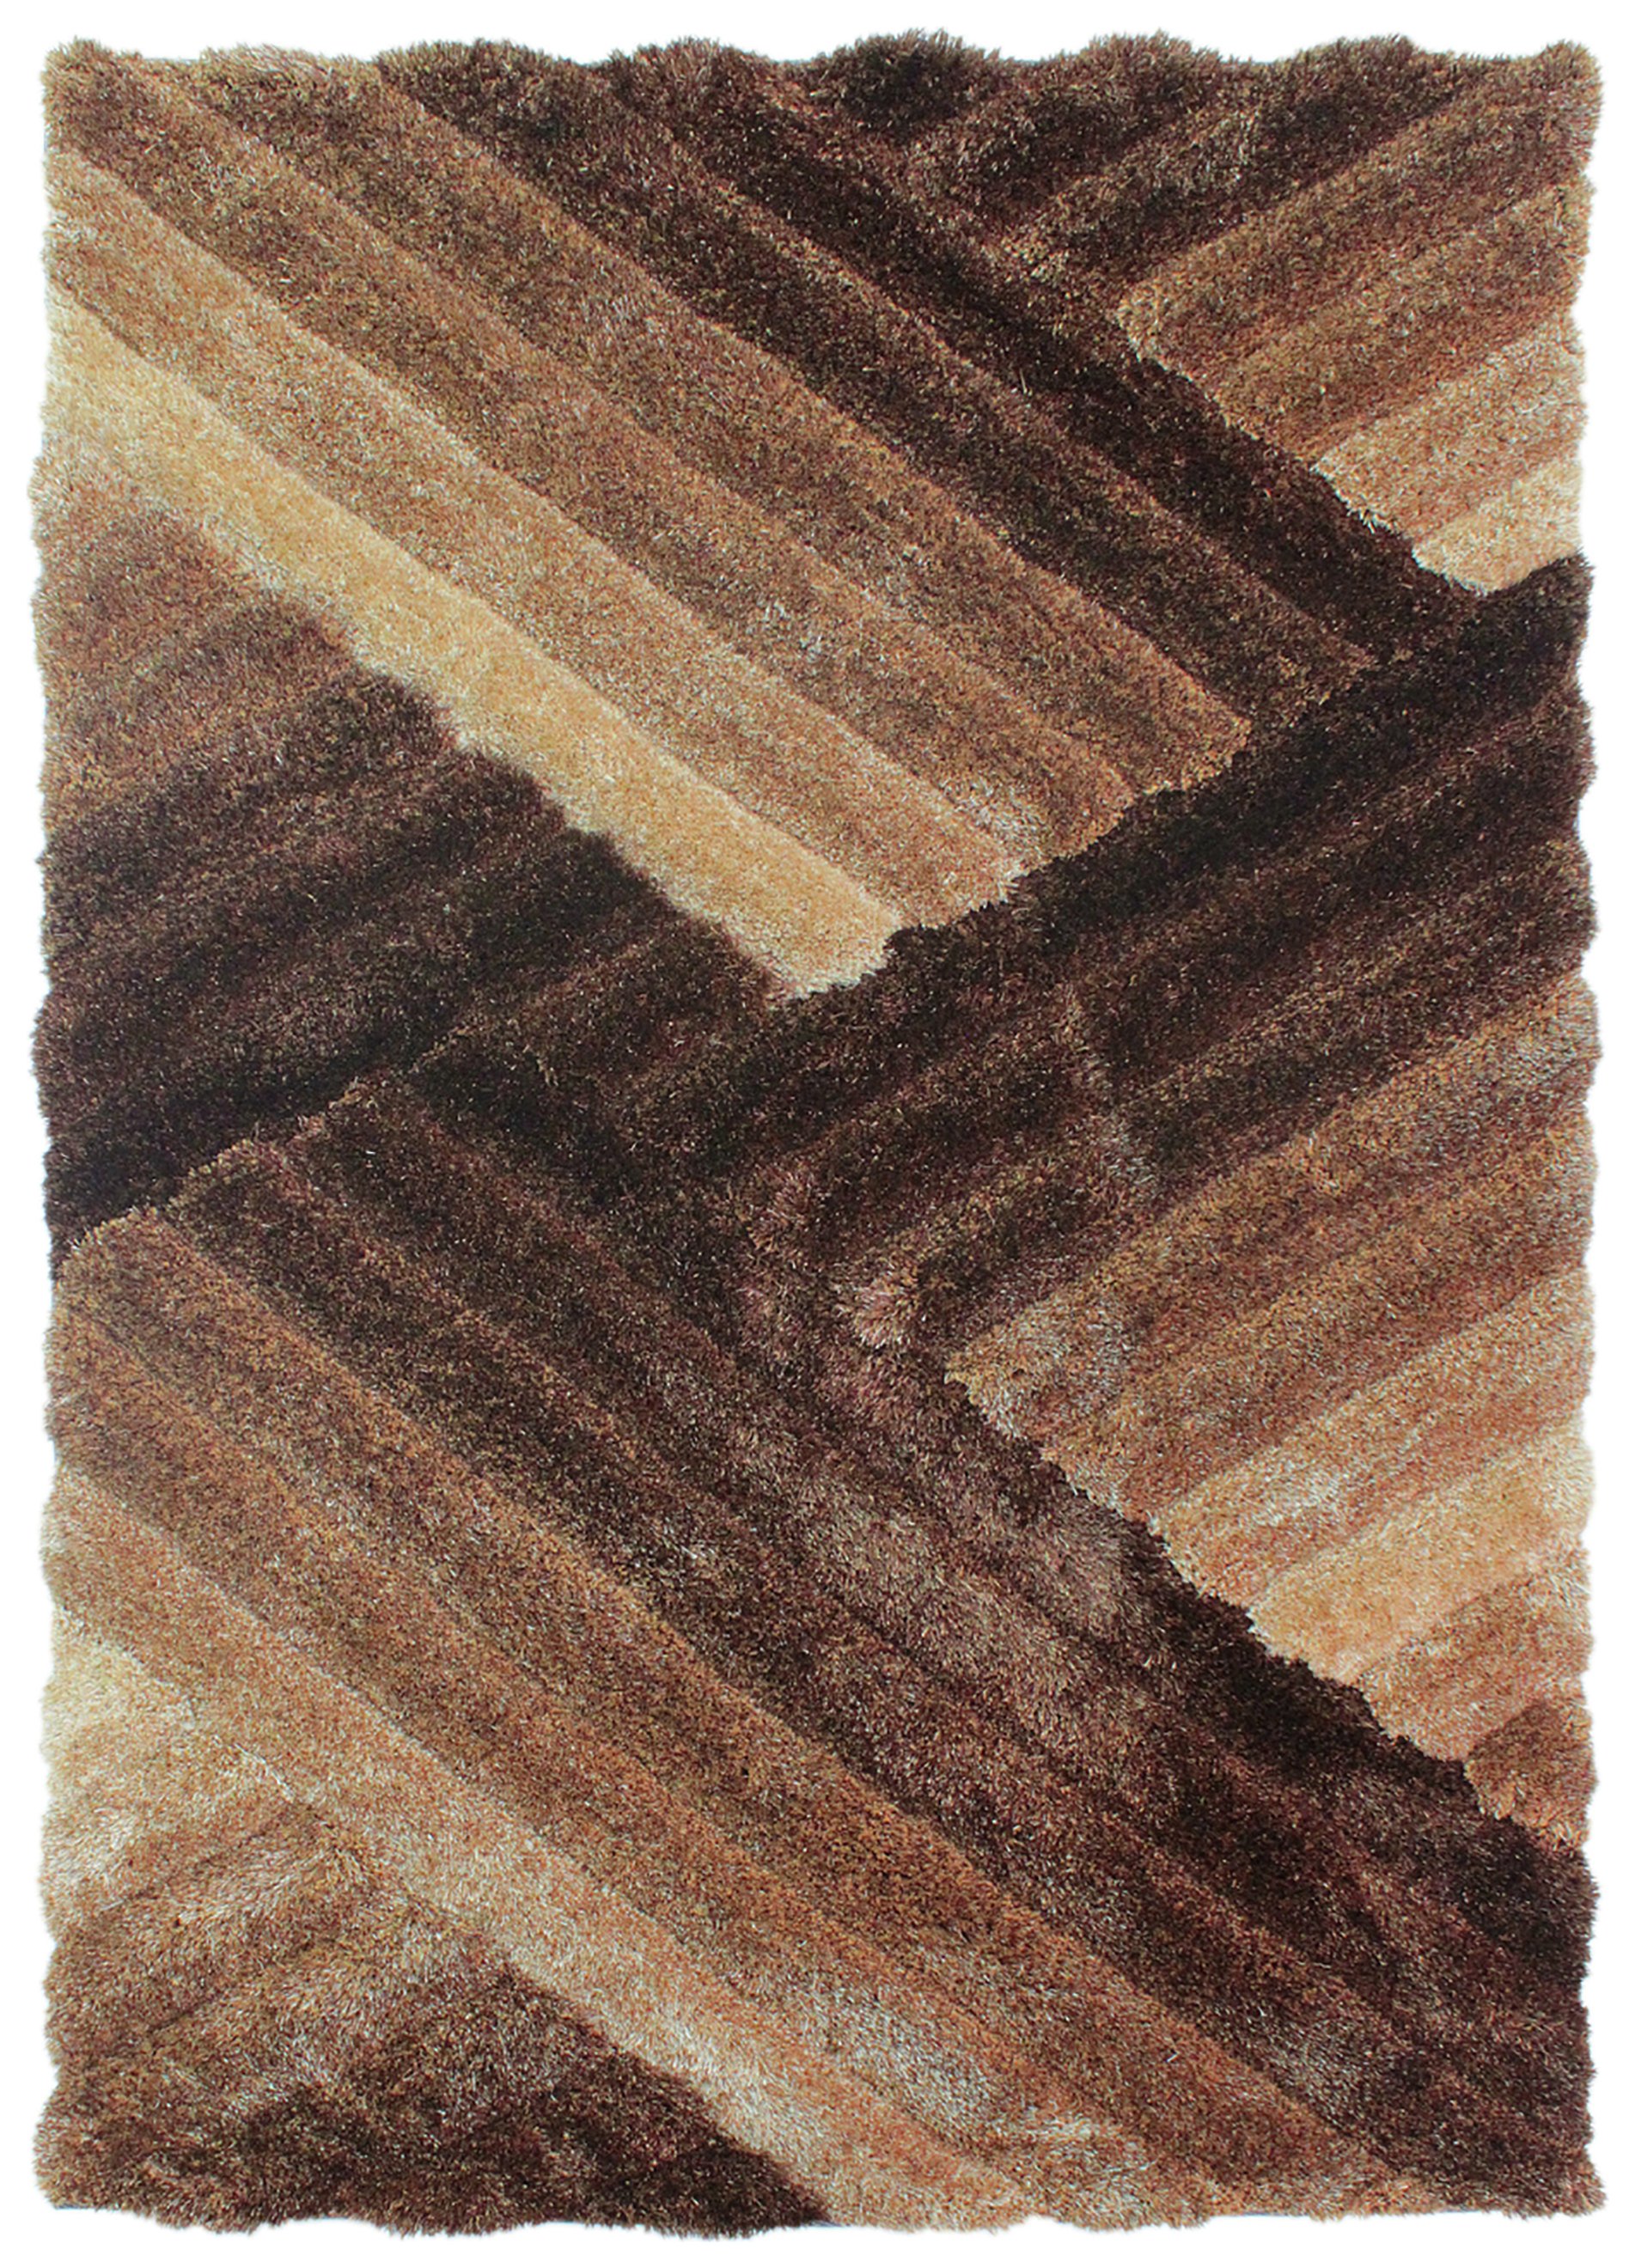 Flair Ascent Rug - 120x170cm - Brown Lattice